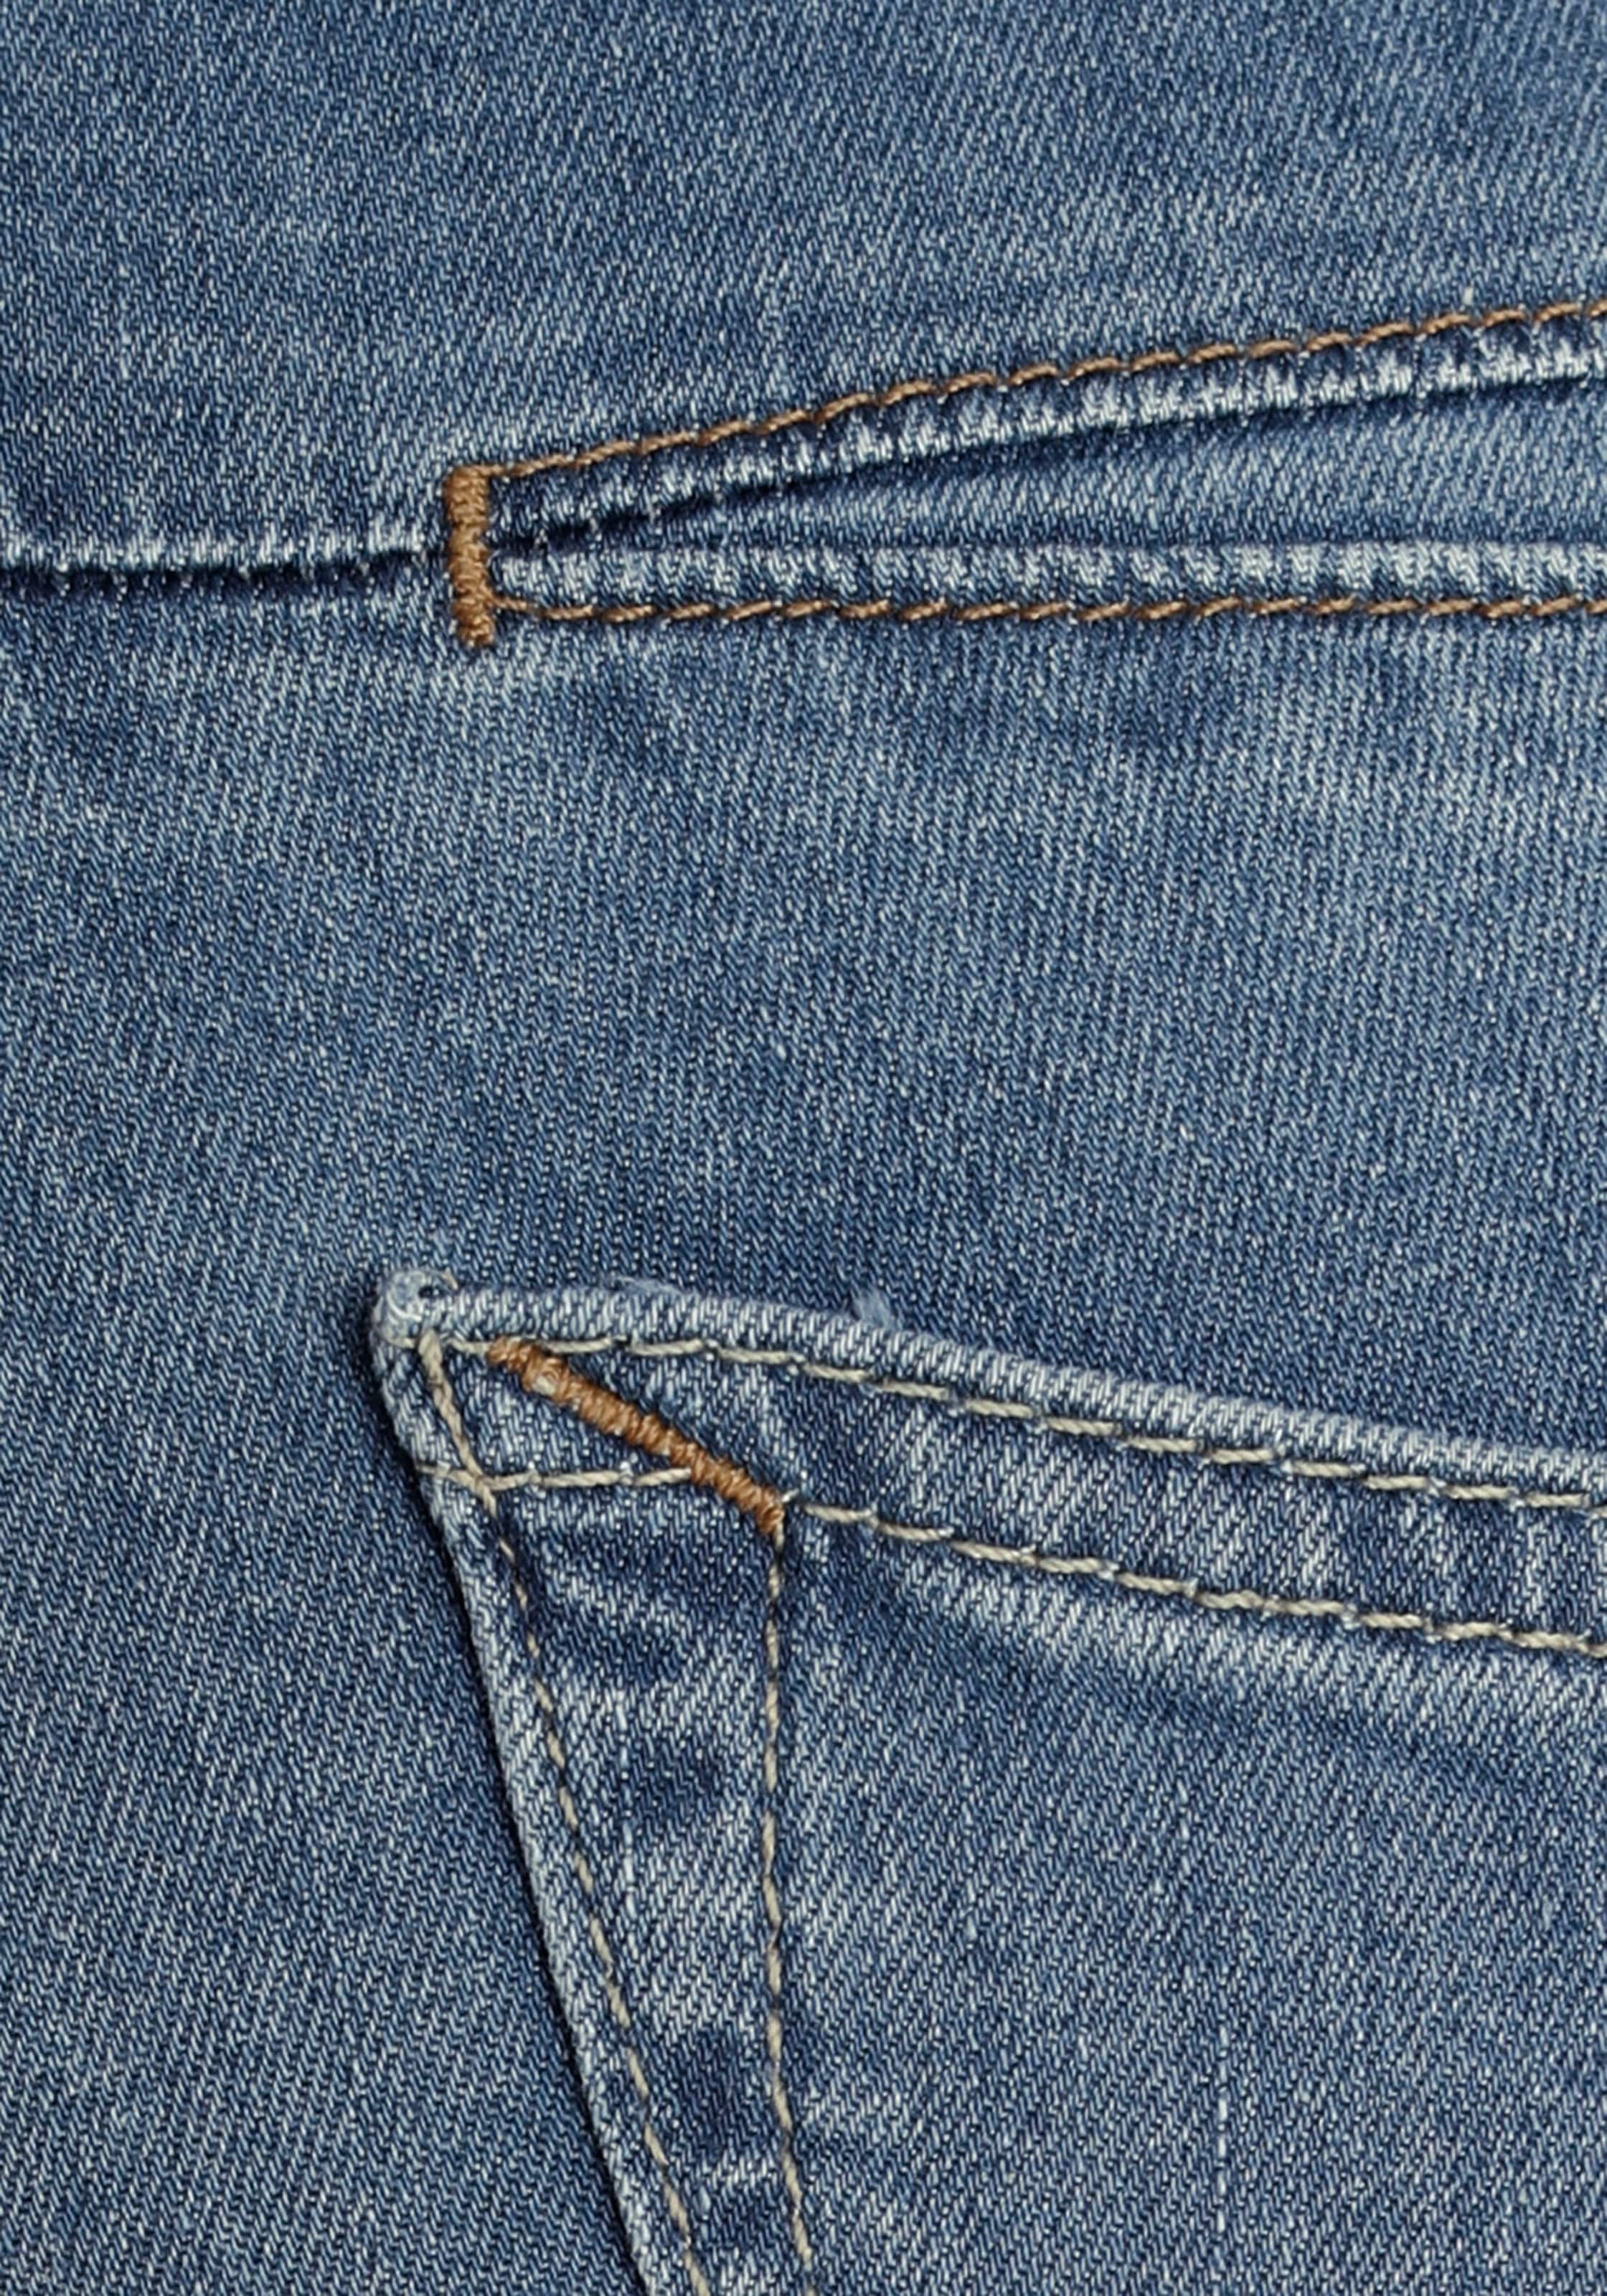 Herrlicher Bootcut-Jeans »PEARL«, Destroyed-Look